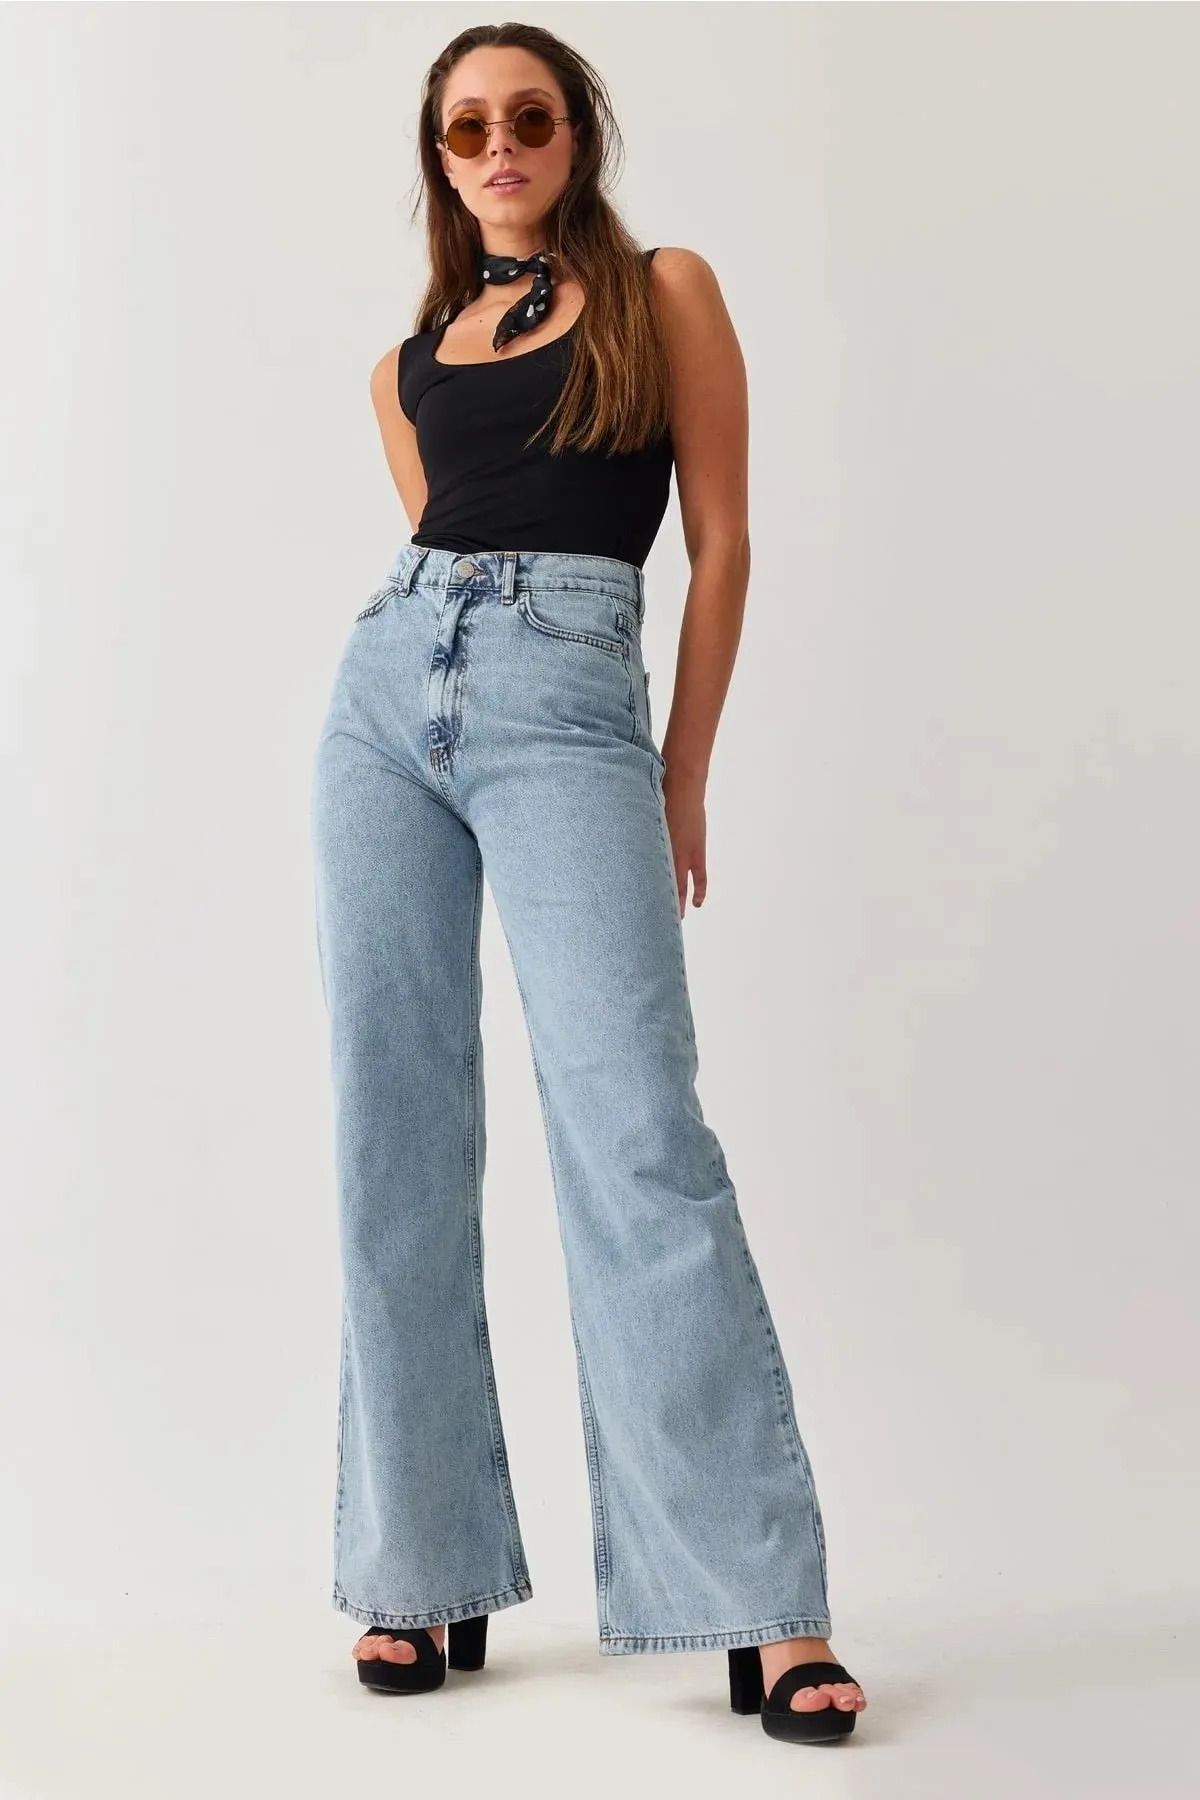 MAKRAS EXCLUSIVE Sahara Mavi Kar Yıkama 90's Yüksek Bel Wide Leg Likralı Salaş Bol Paça Kot Pantolon Jeans